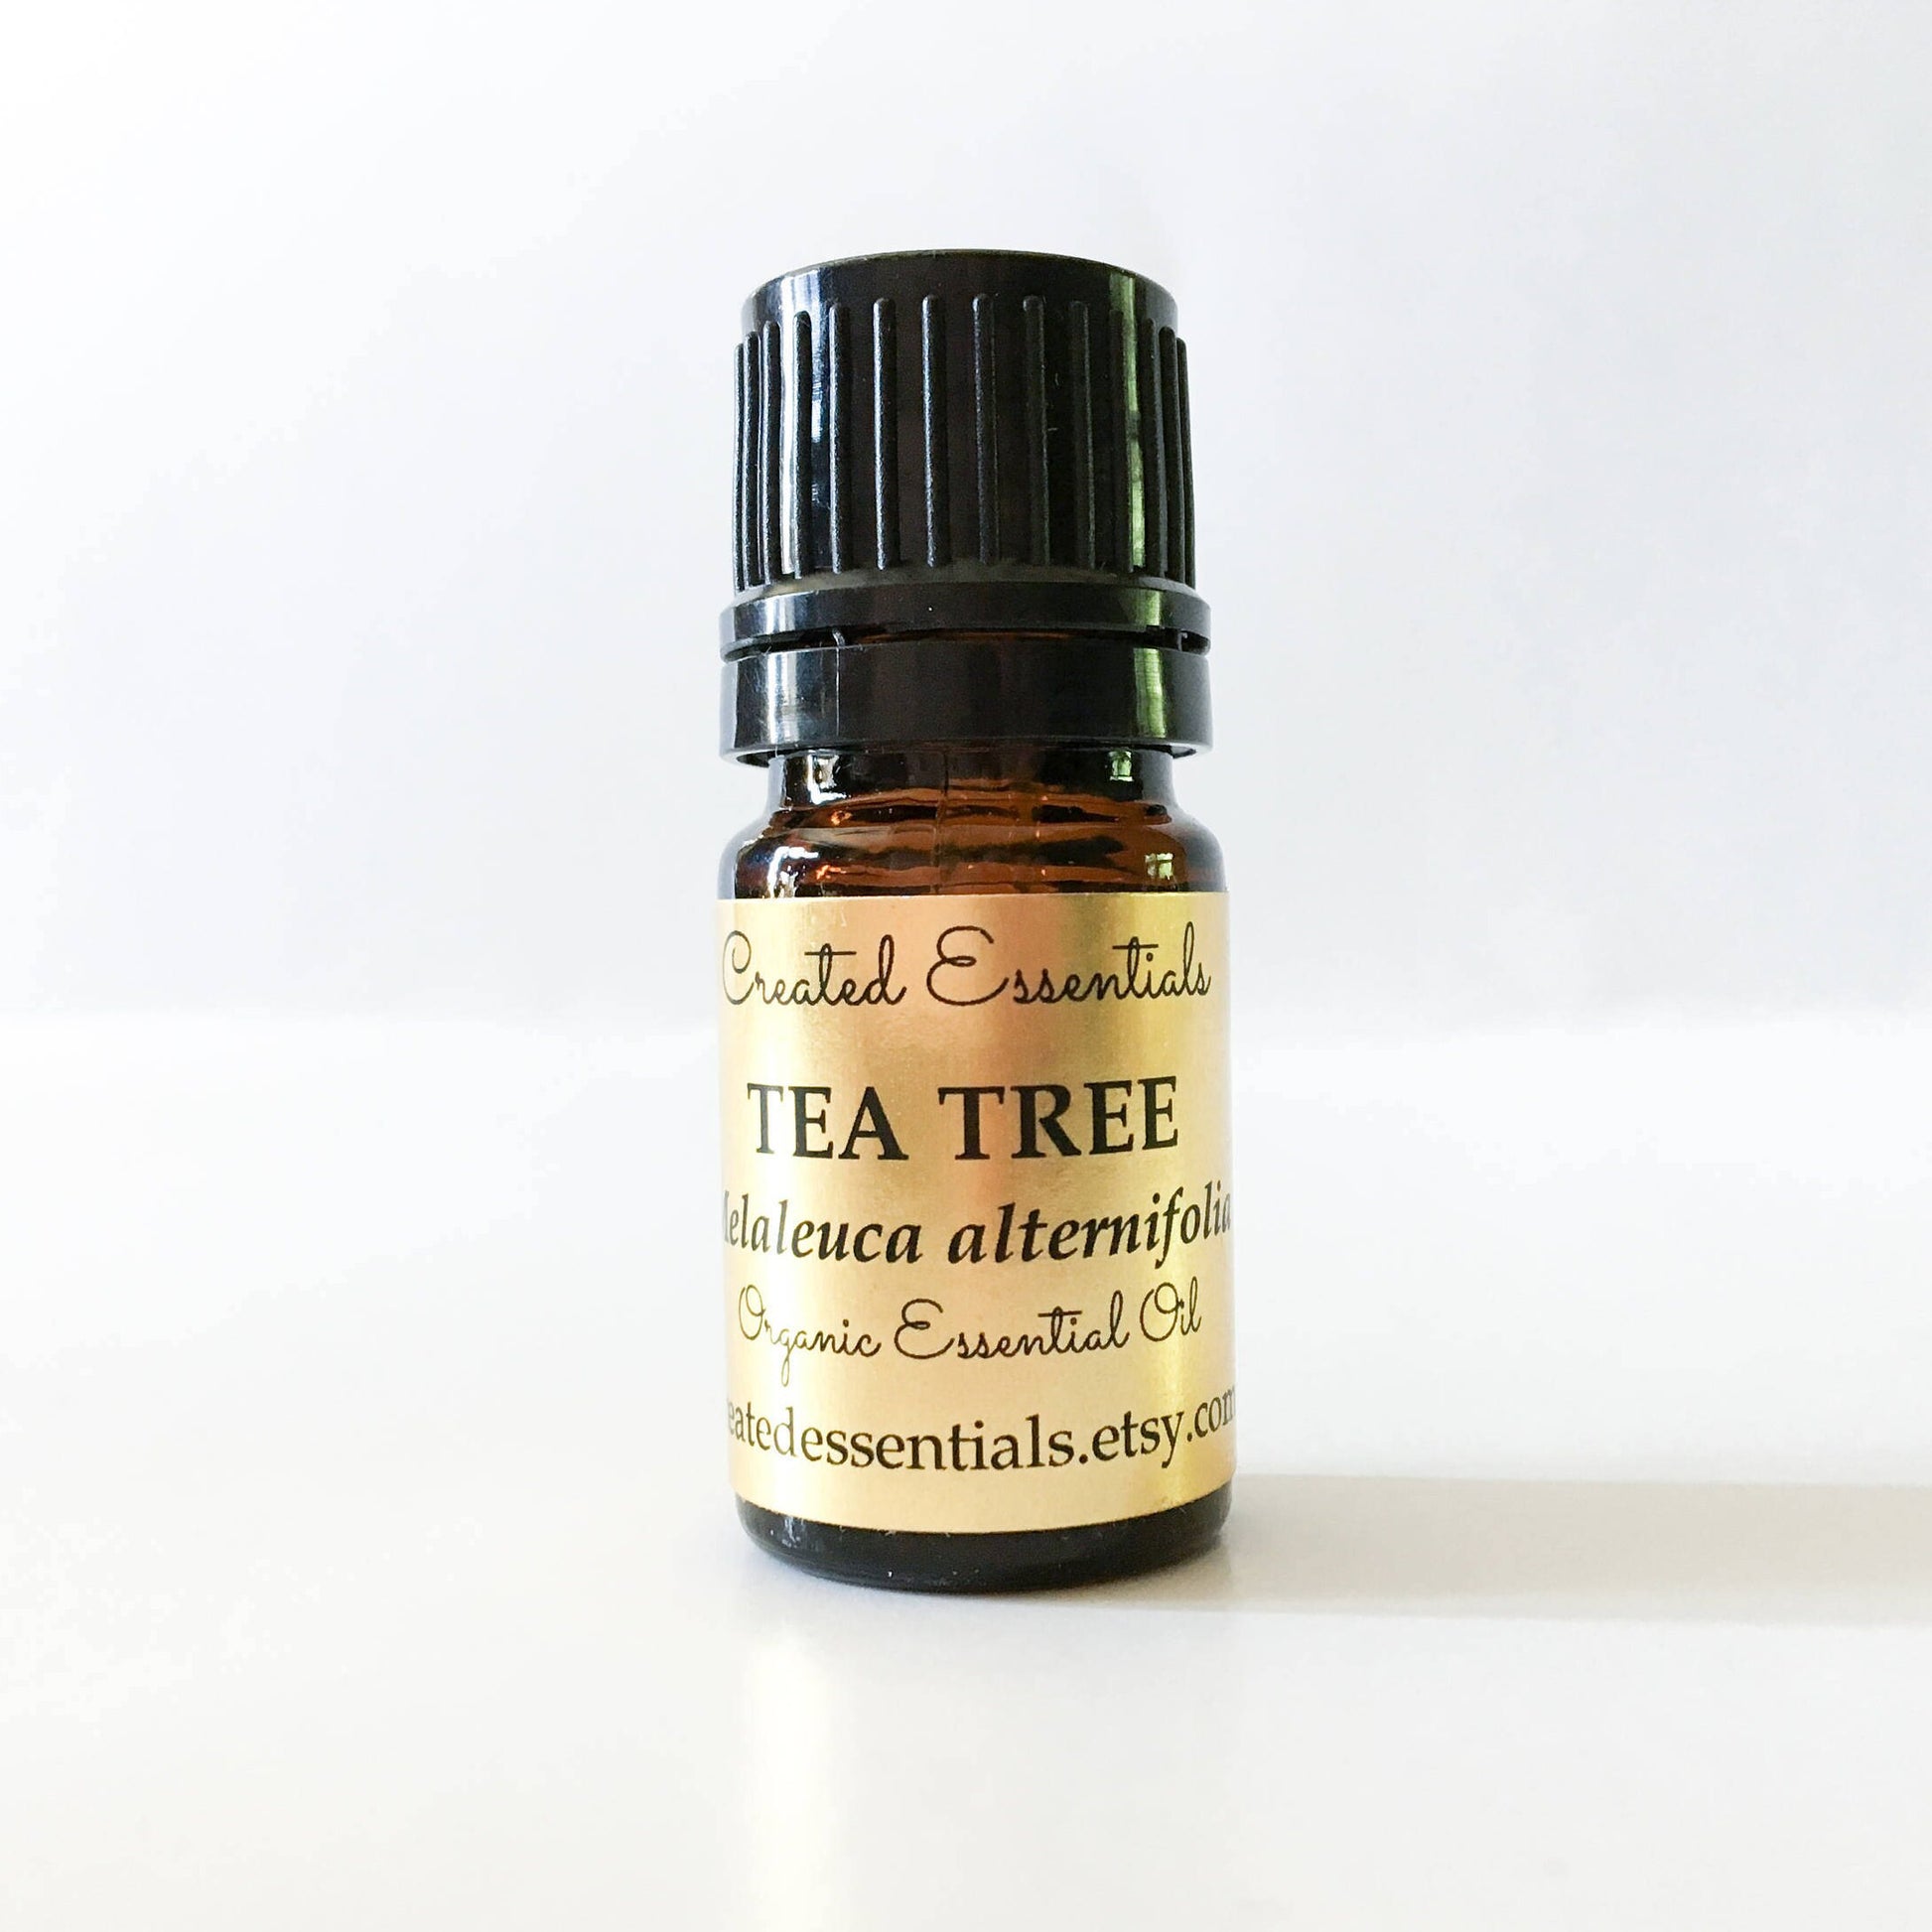 Tea Tree Essential Oil | Organic Essential Oil of Tea Tree | Pure Essential Oil | Therapeutic Essential Oil of Melaleuca alternifolia